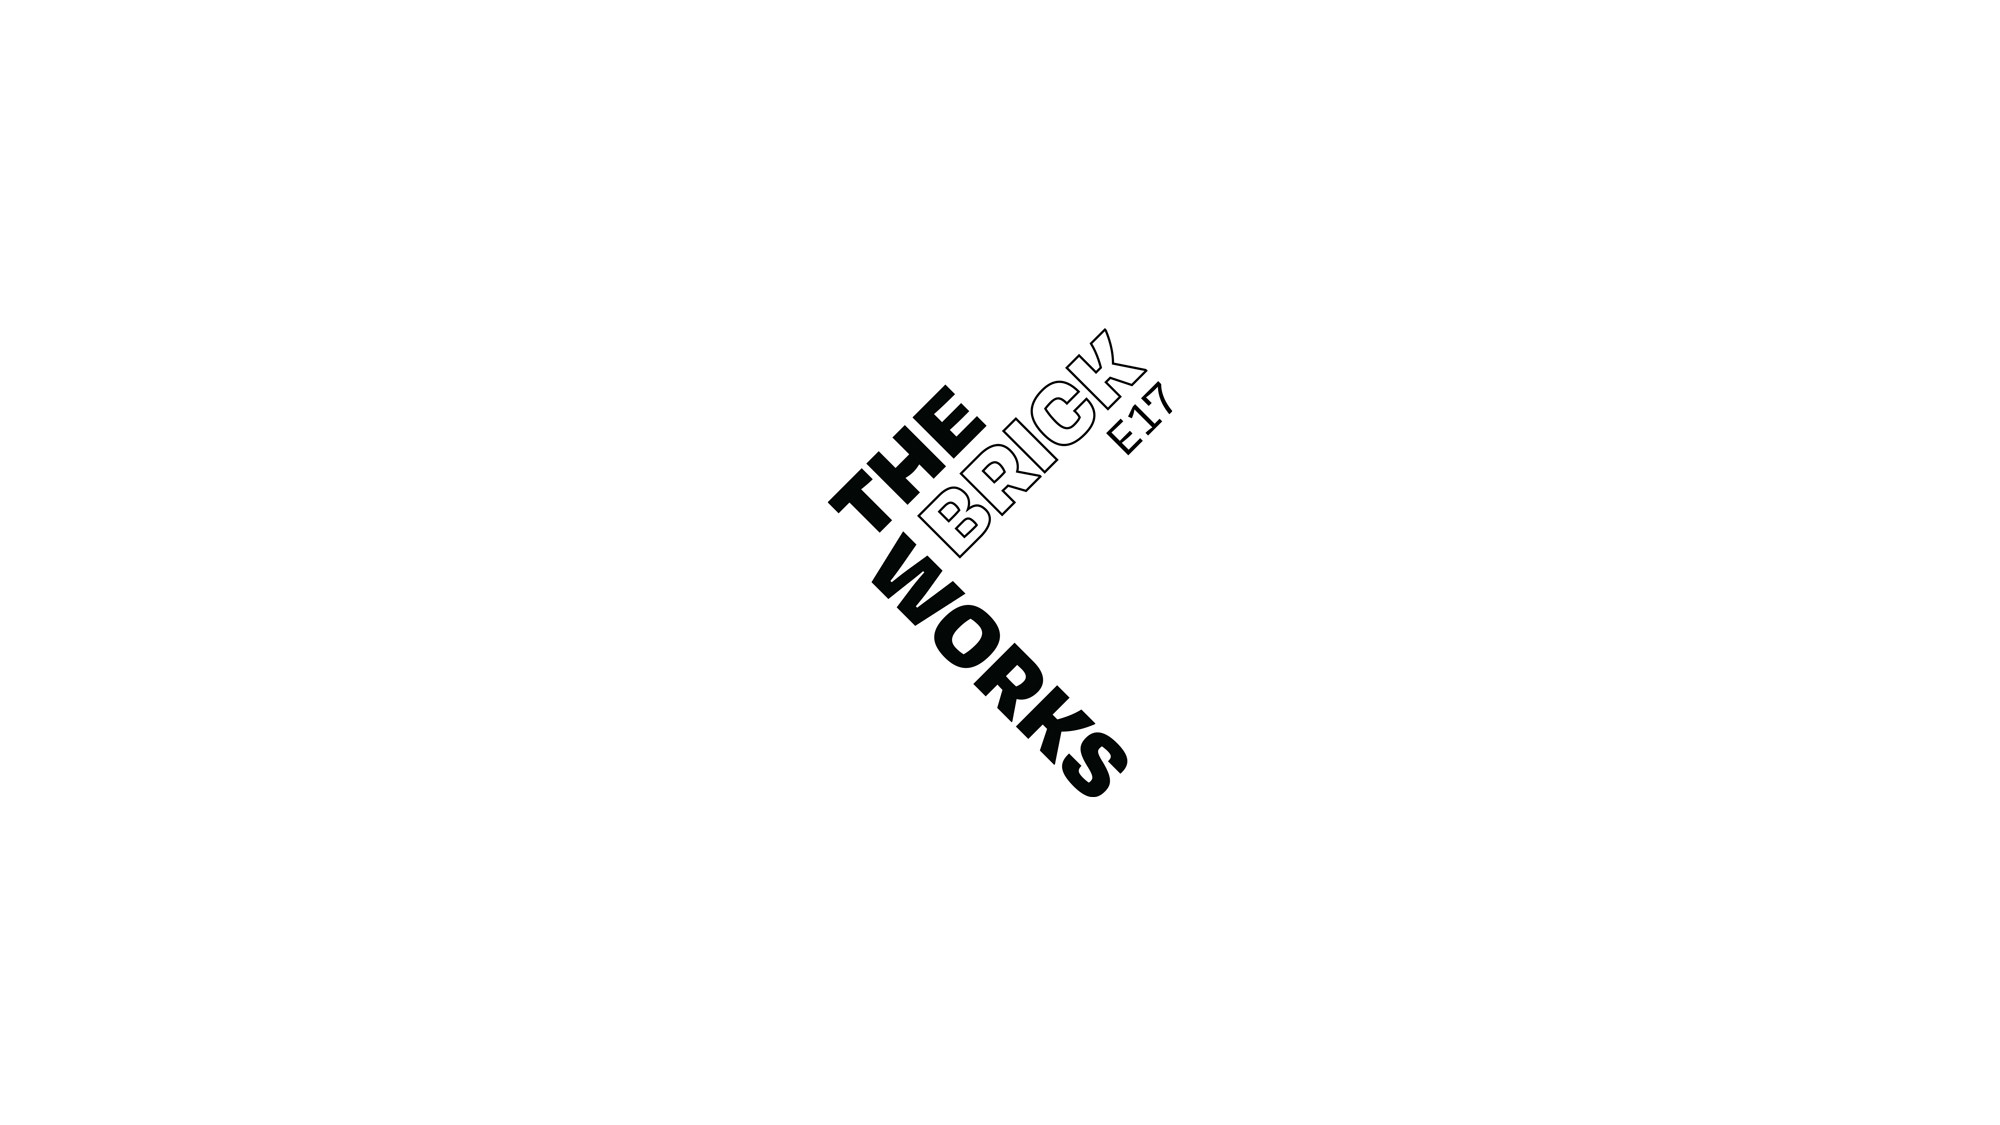 Th Brick Works development logo